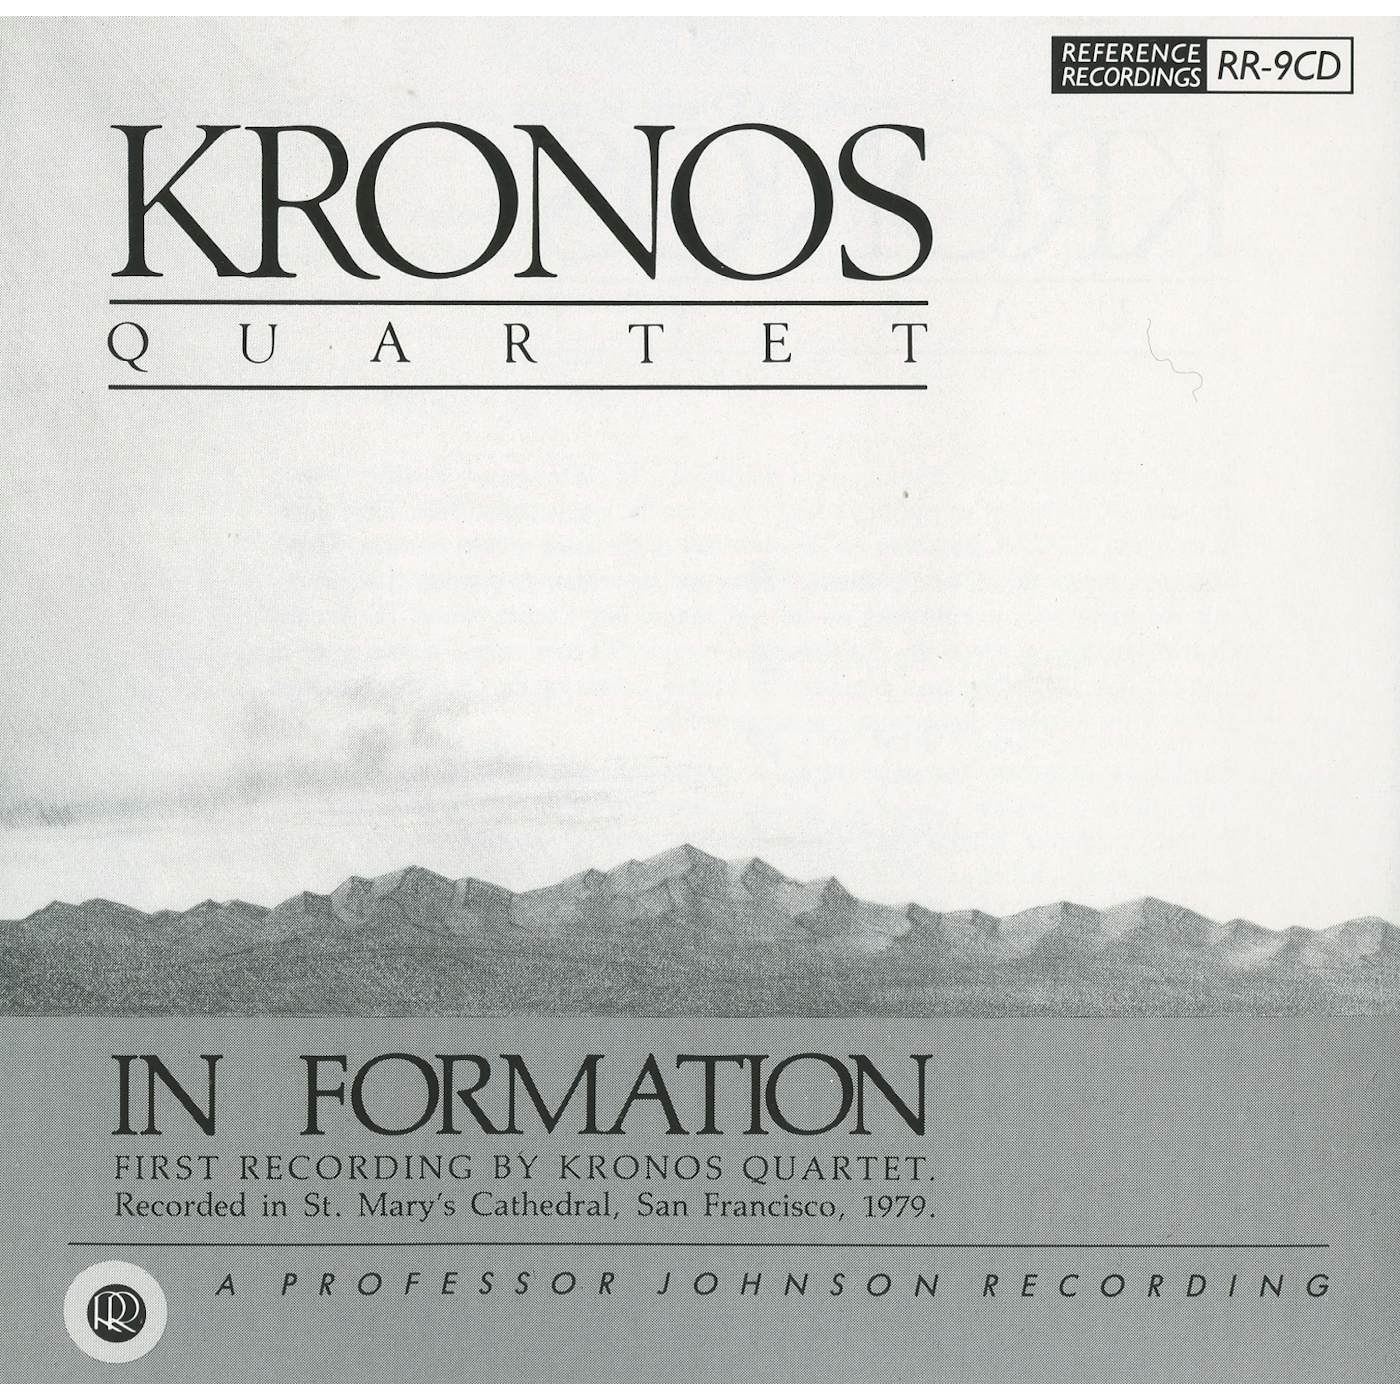 Kronos Quartet IN FORMATION CD